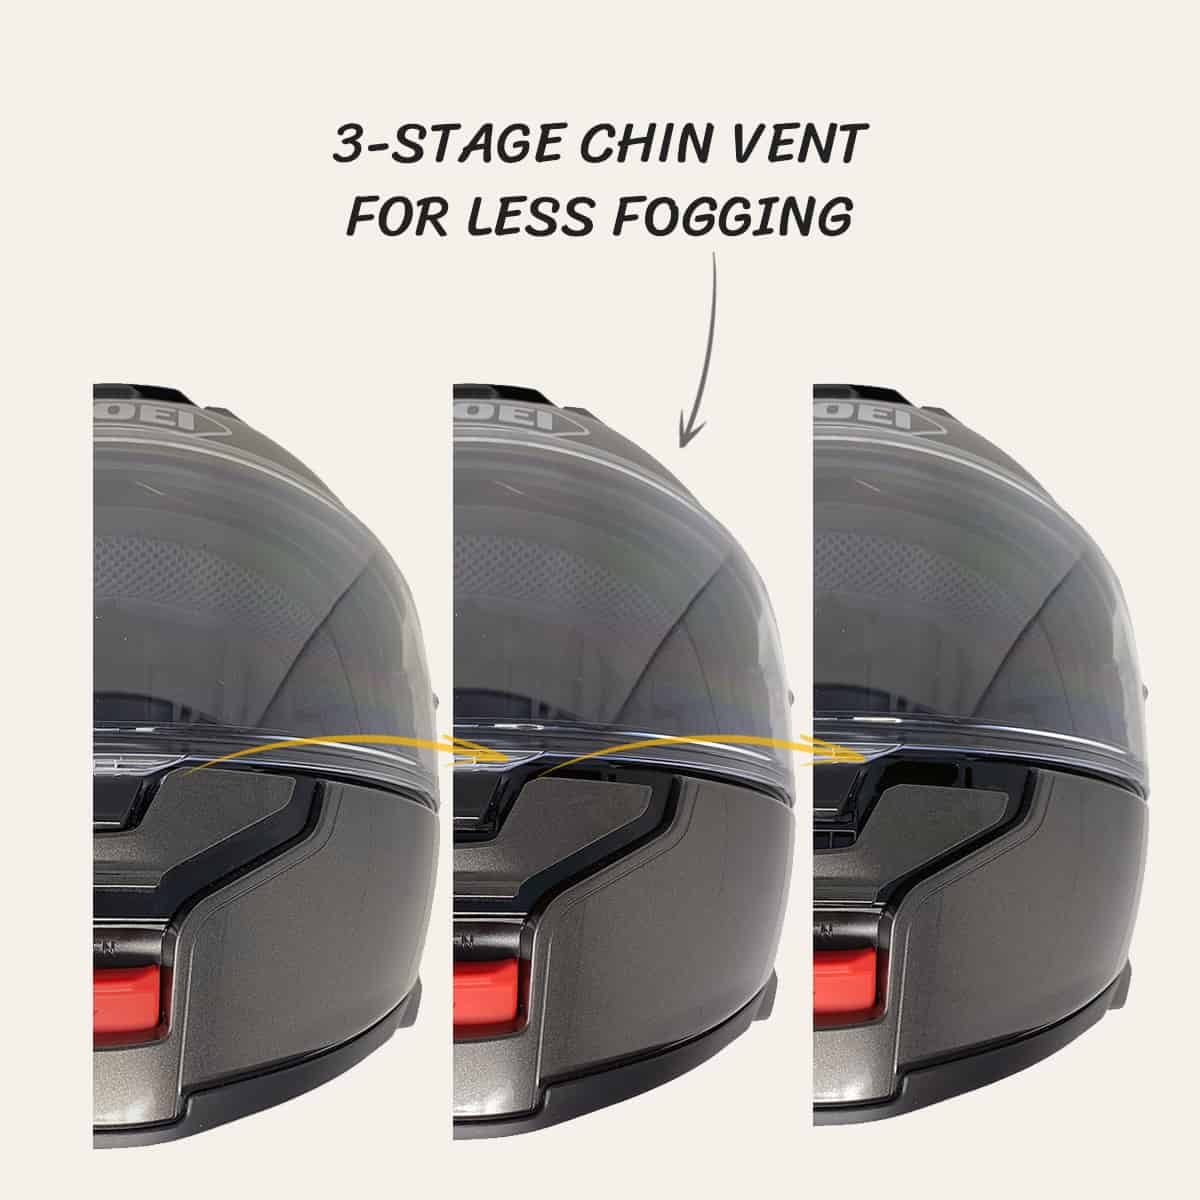 Shoei Neotec 3 Flip Front Helmet ECE22.06 - Grasp TC10